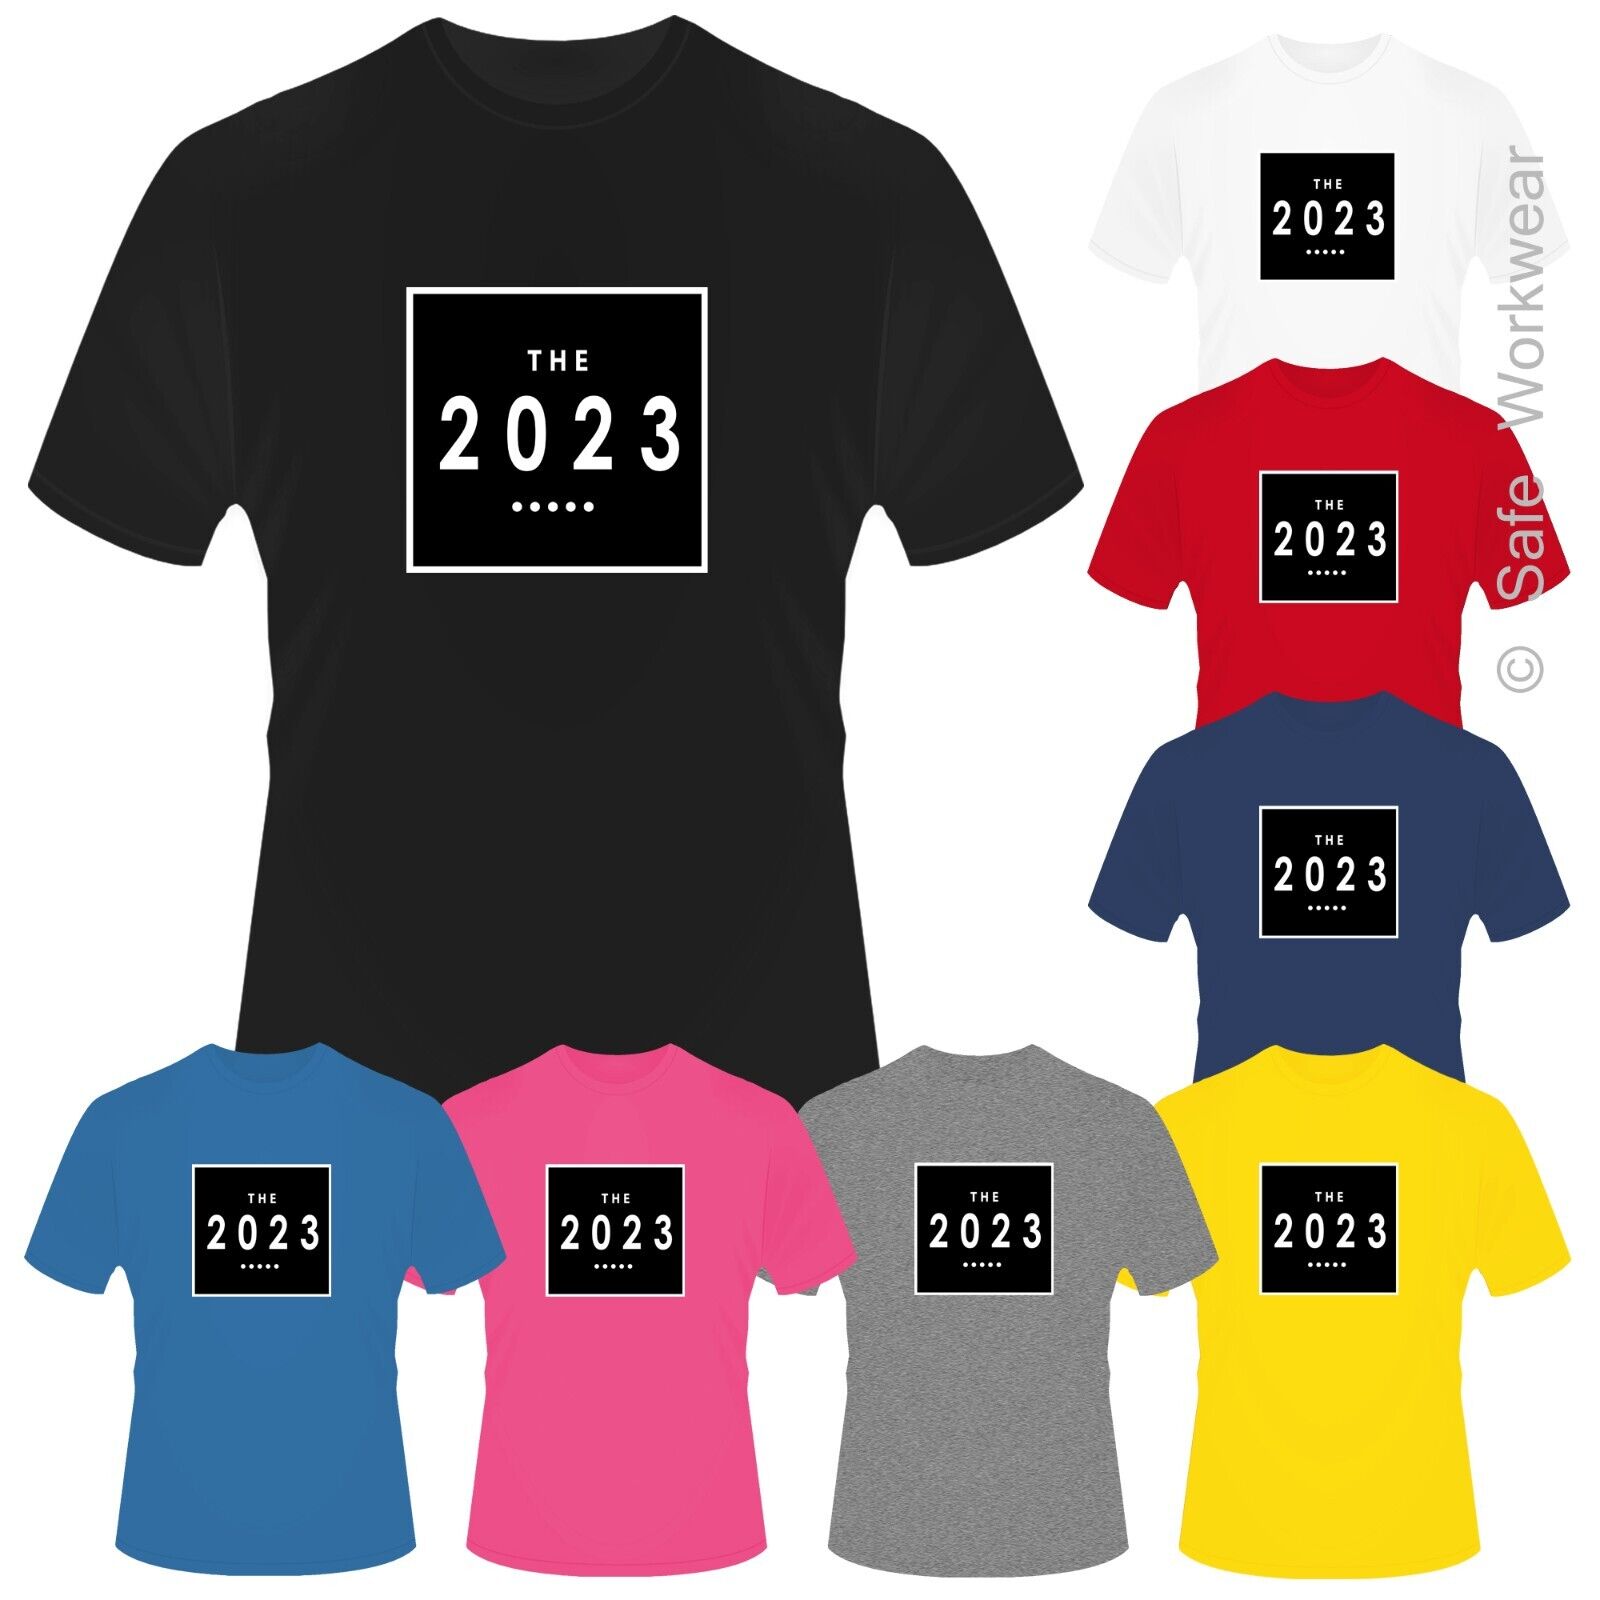 The 2023 - Happy New Year T-Shirt for Men, Women, Children